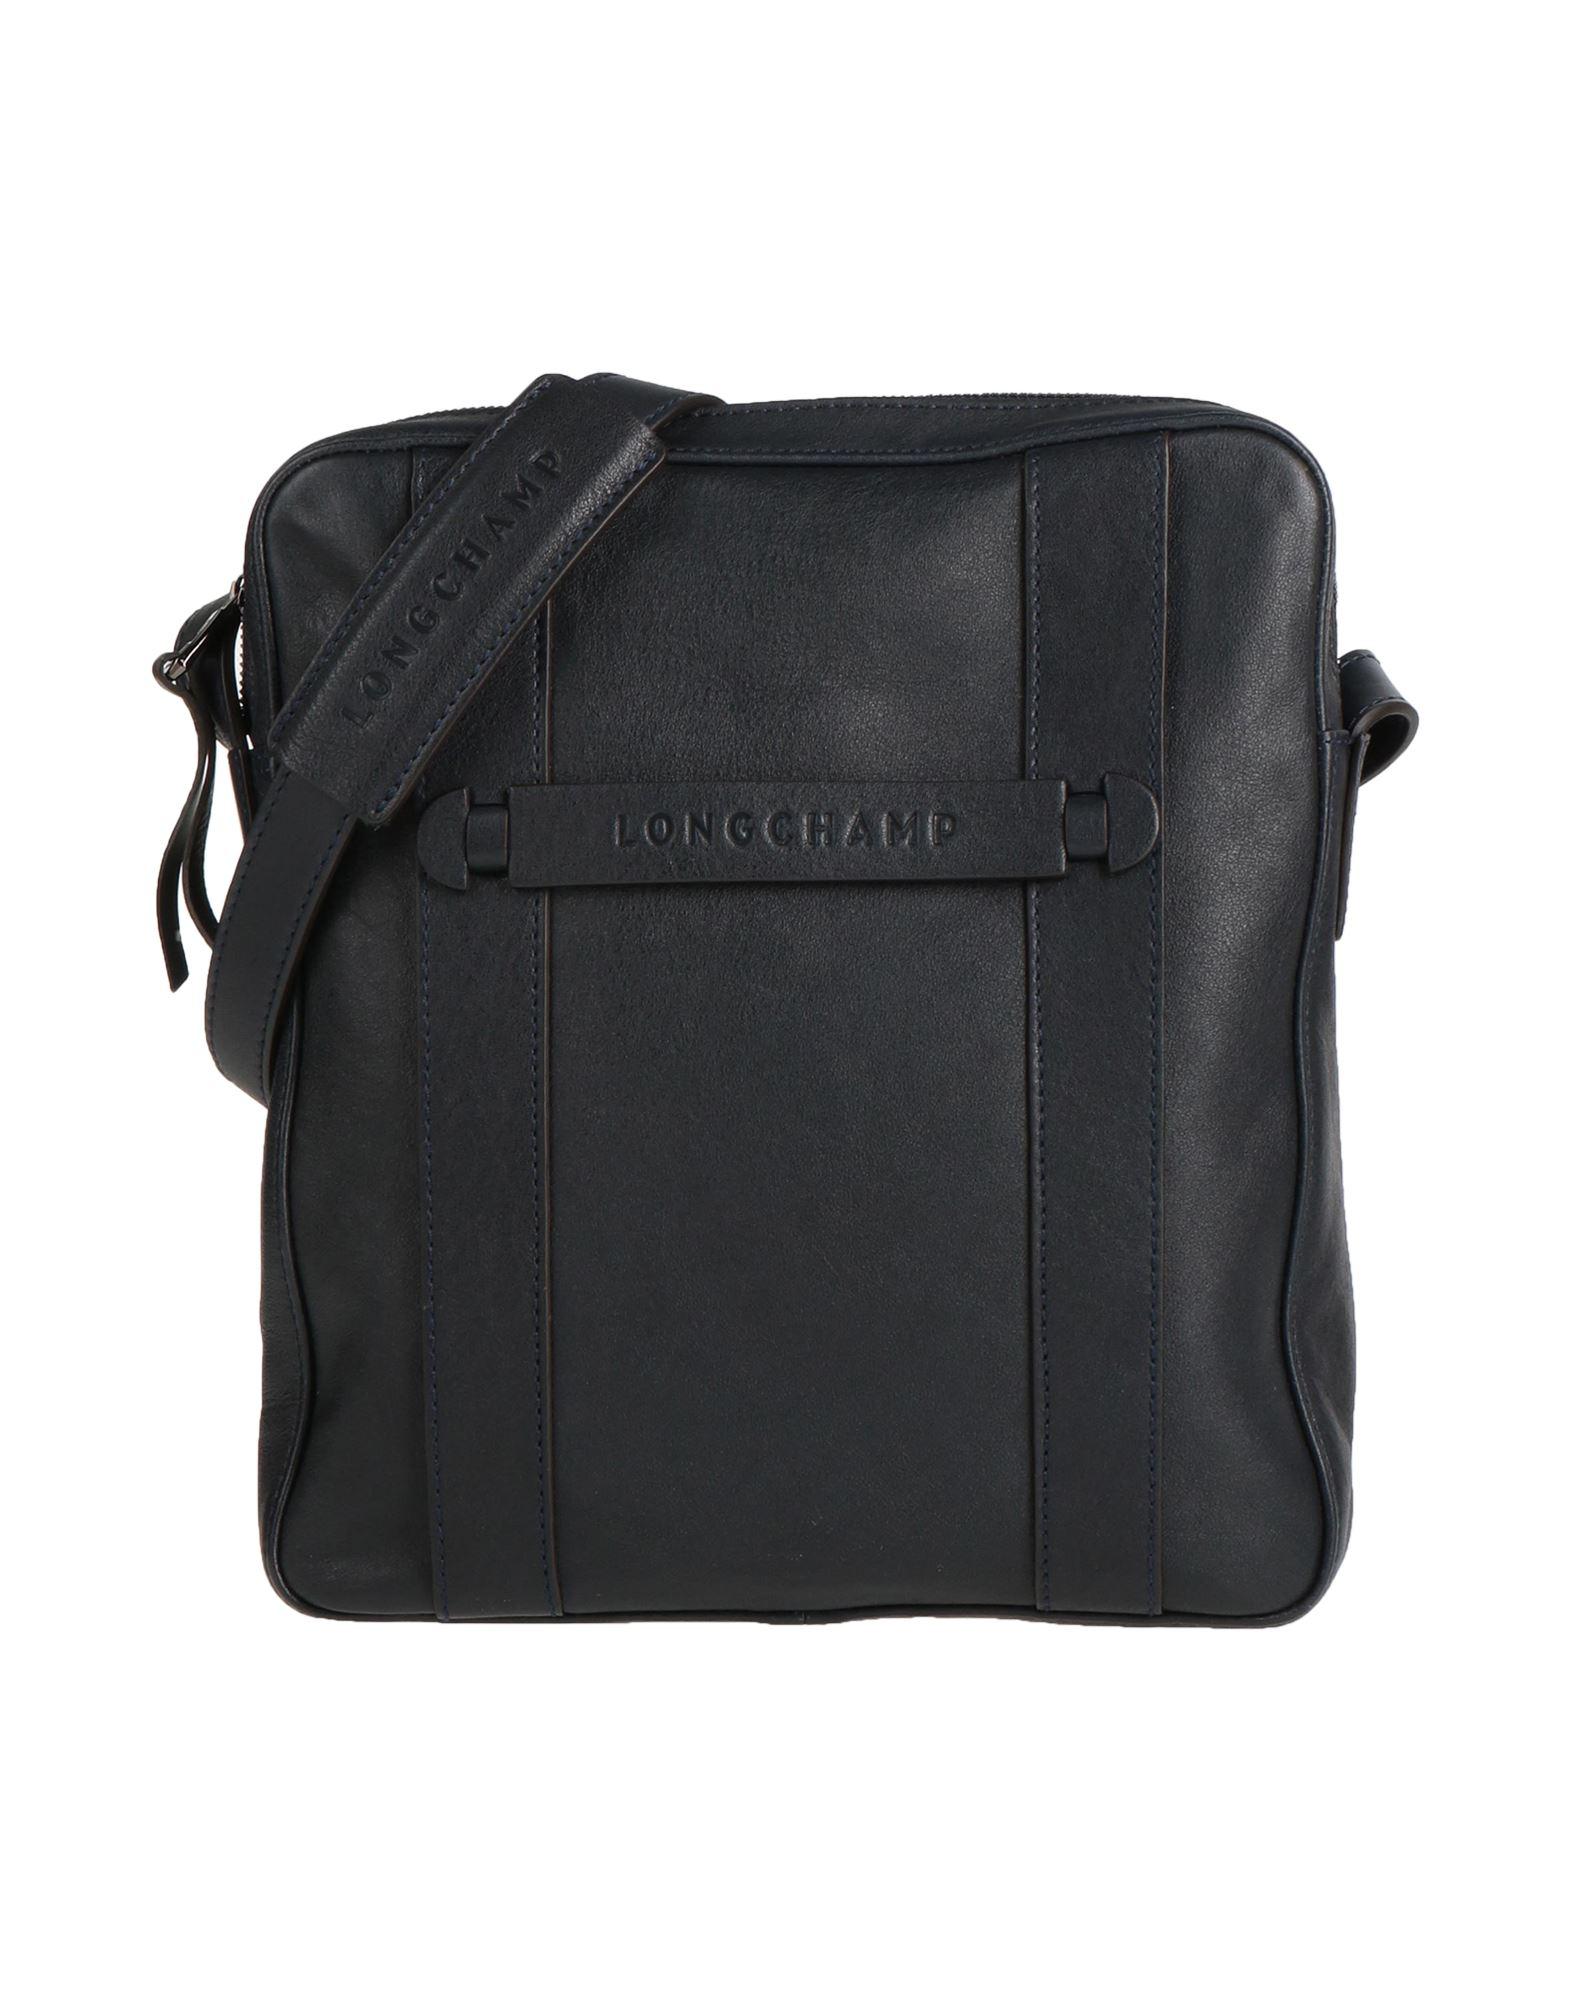 Longchamp Small 3D Crossbody Bag